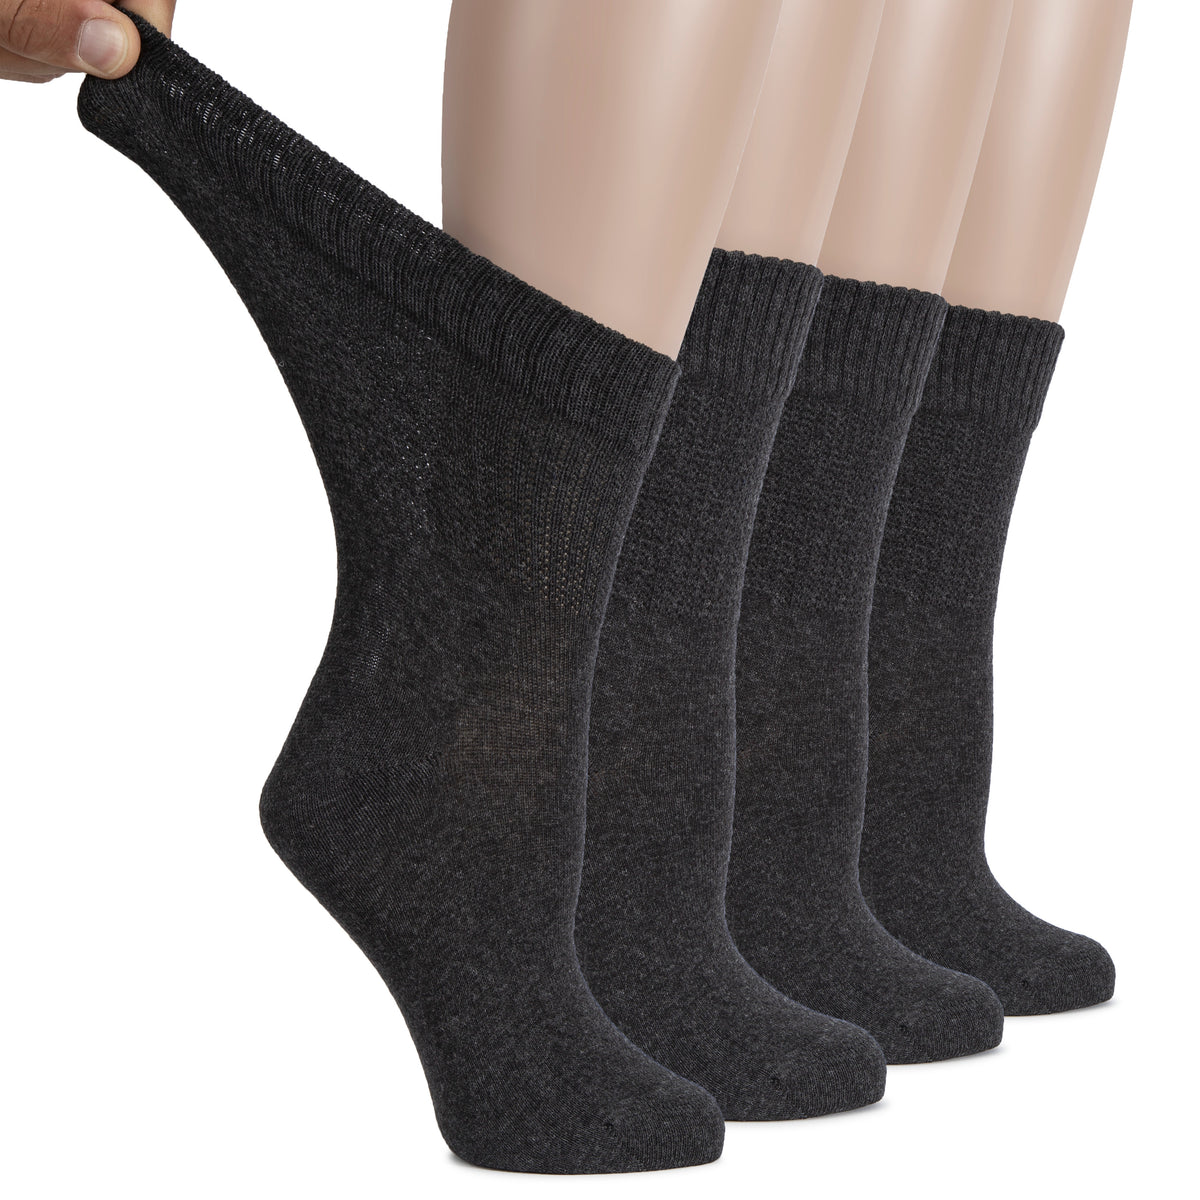 Hugh Ugoli Cotton Diabetic Women's Socks, Crew, Loose, Wide Stretchy, Thin, Seamless Toe and Non-Binding Top, 4 Pairs | Shoe Size: 9-12 | NavyBlue / Black